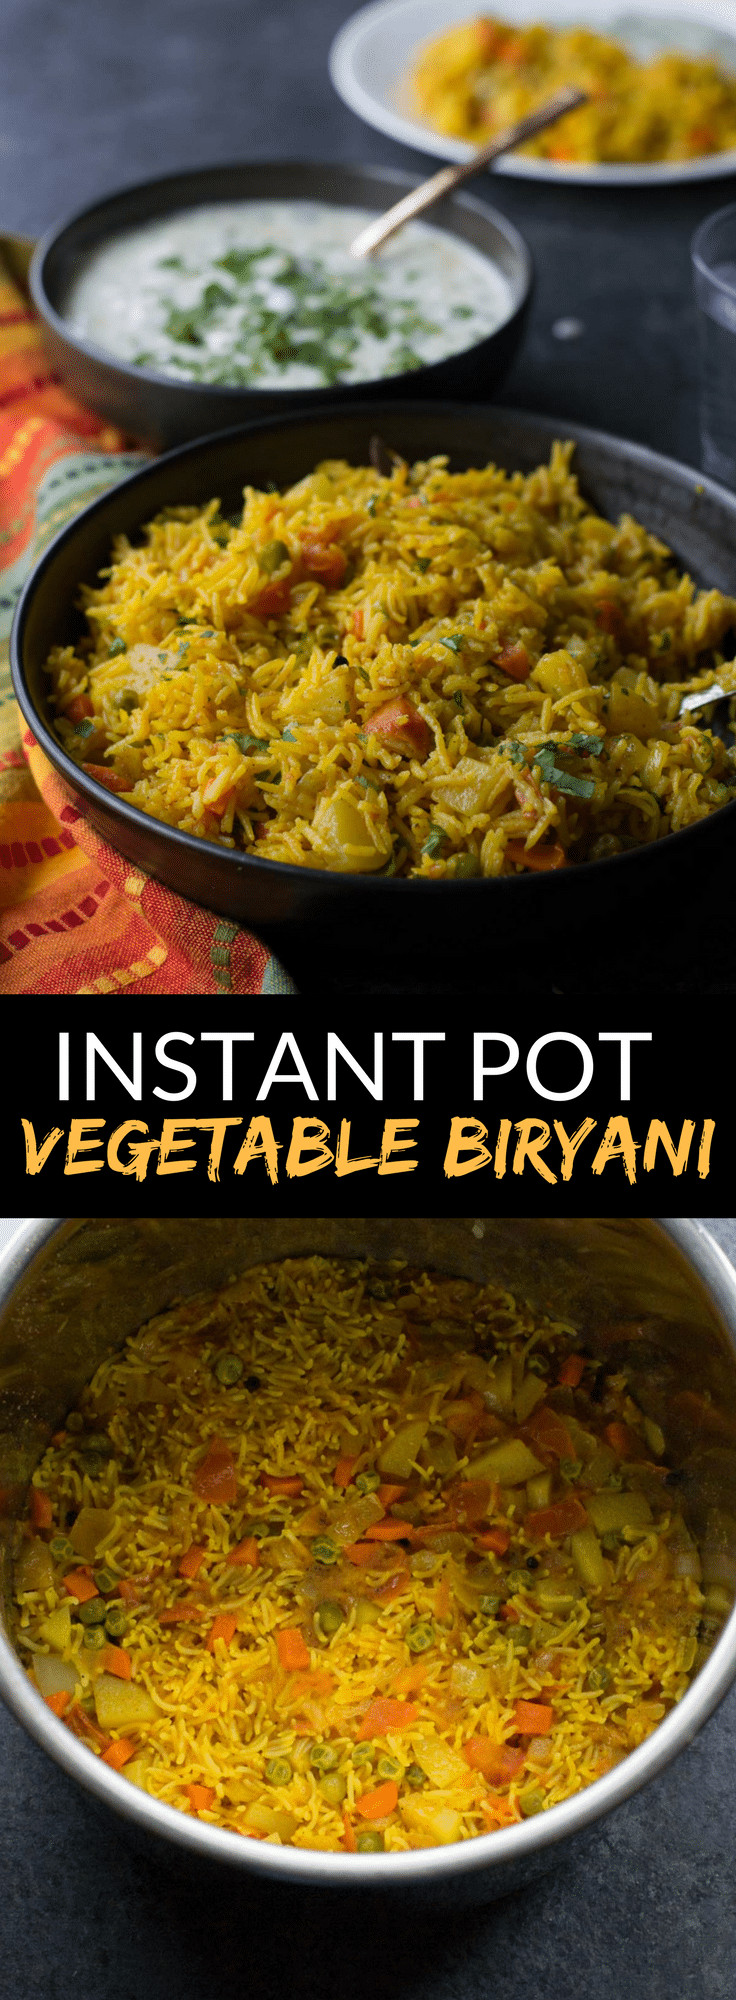 Instant Pot Vegetarian Recipes
 Instant Pot Ve able biryani recipe How to make veg